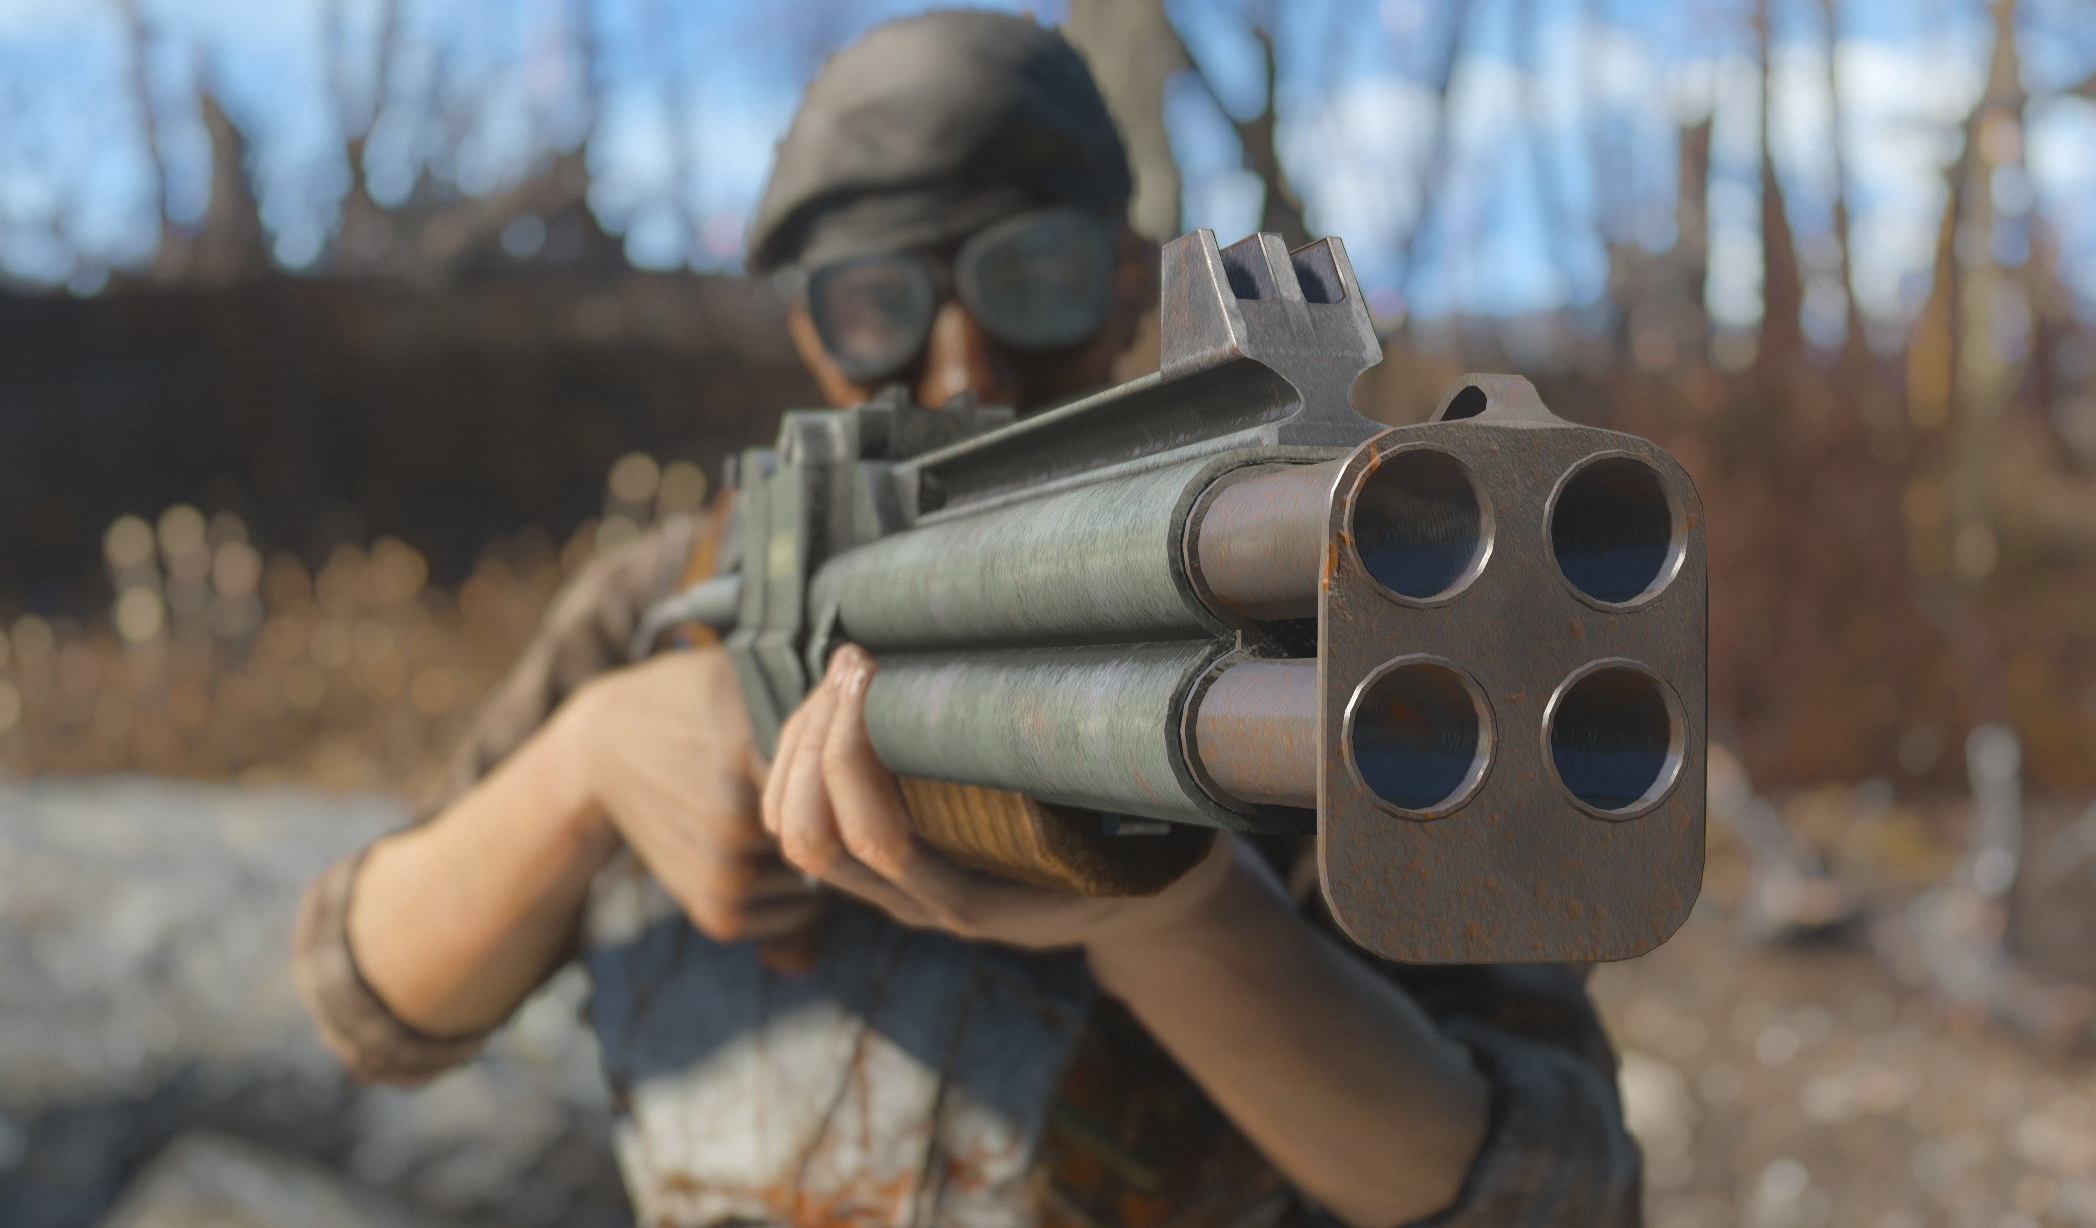  You can use Fallout: Miami's sick quad-barrel shotgun in Fallout 4 